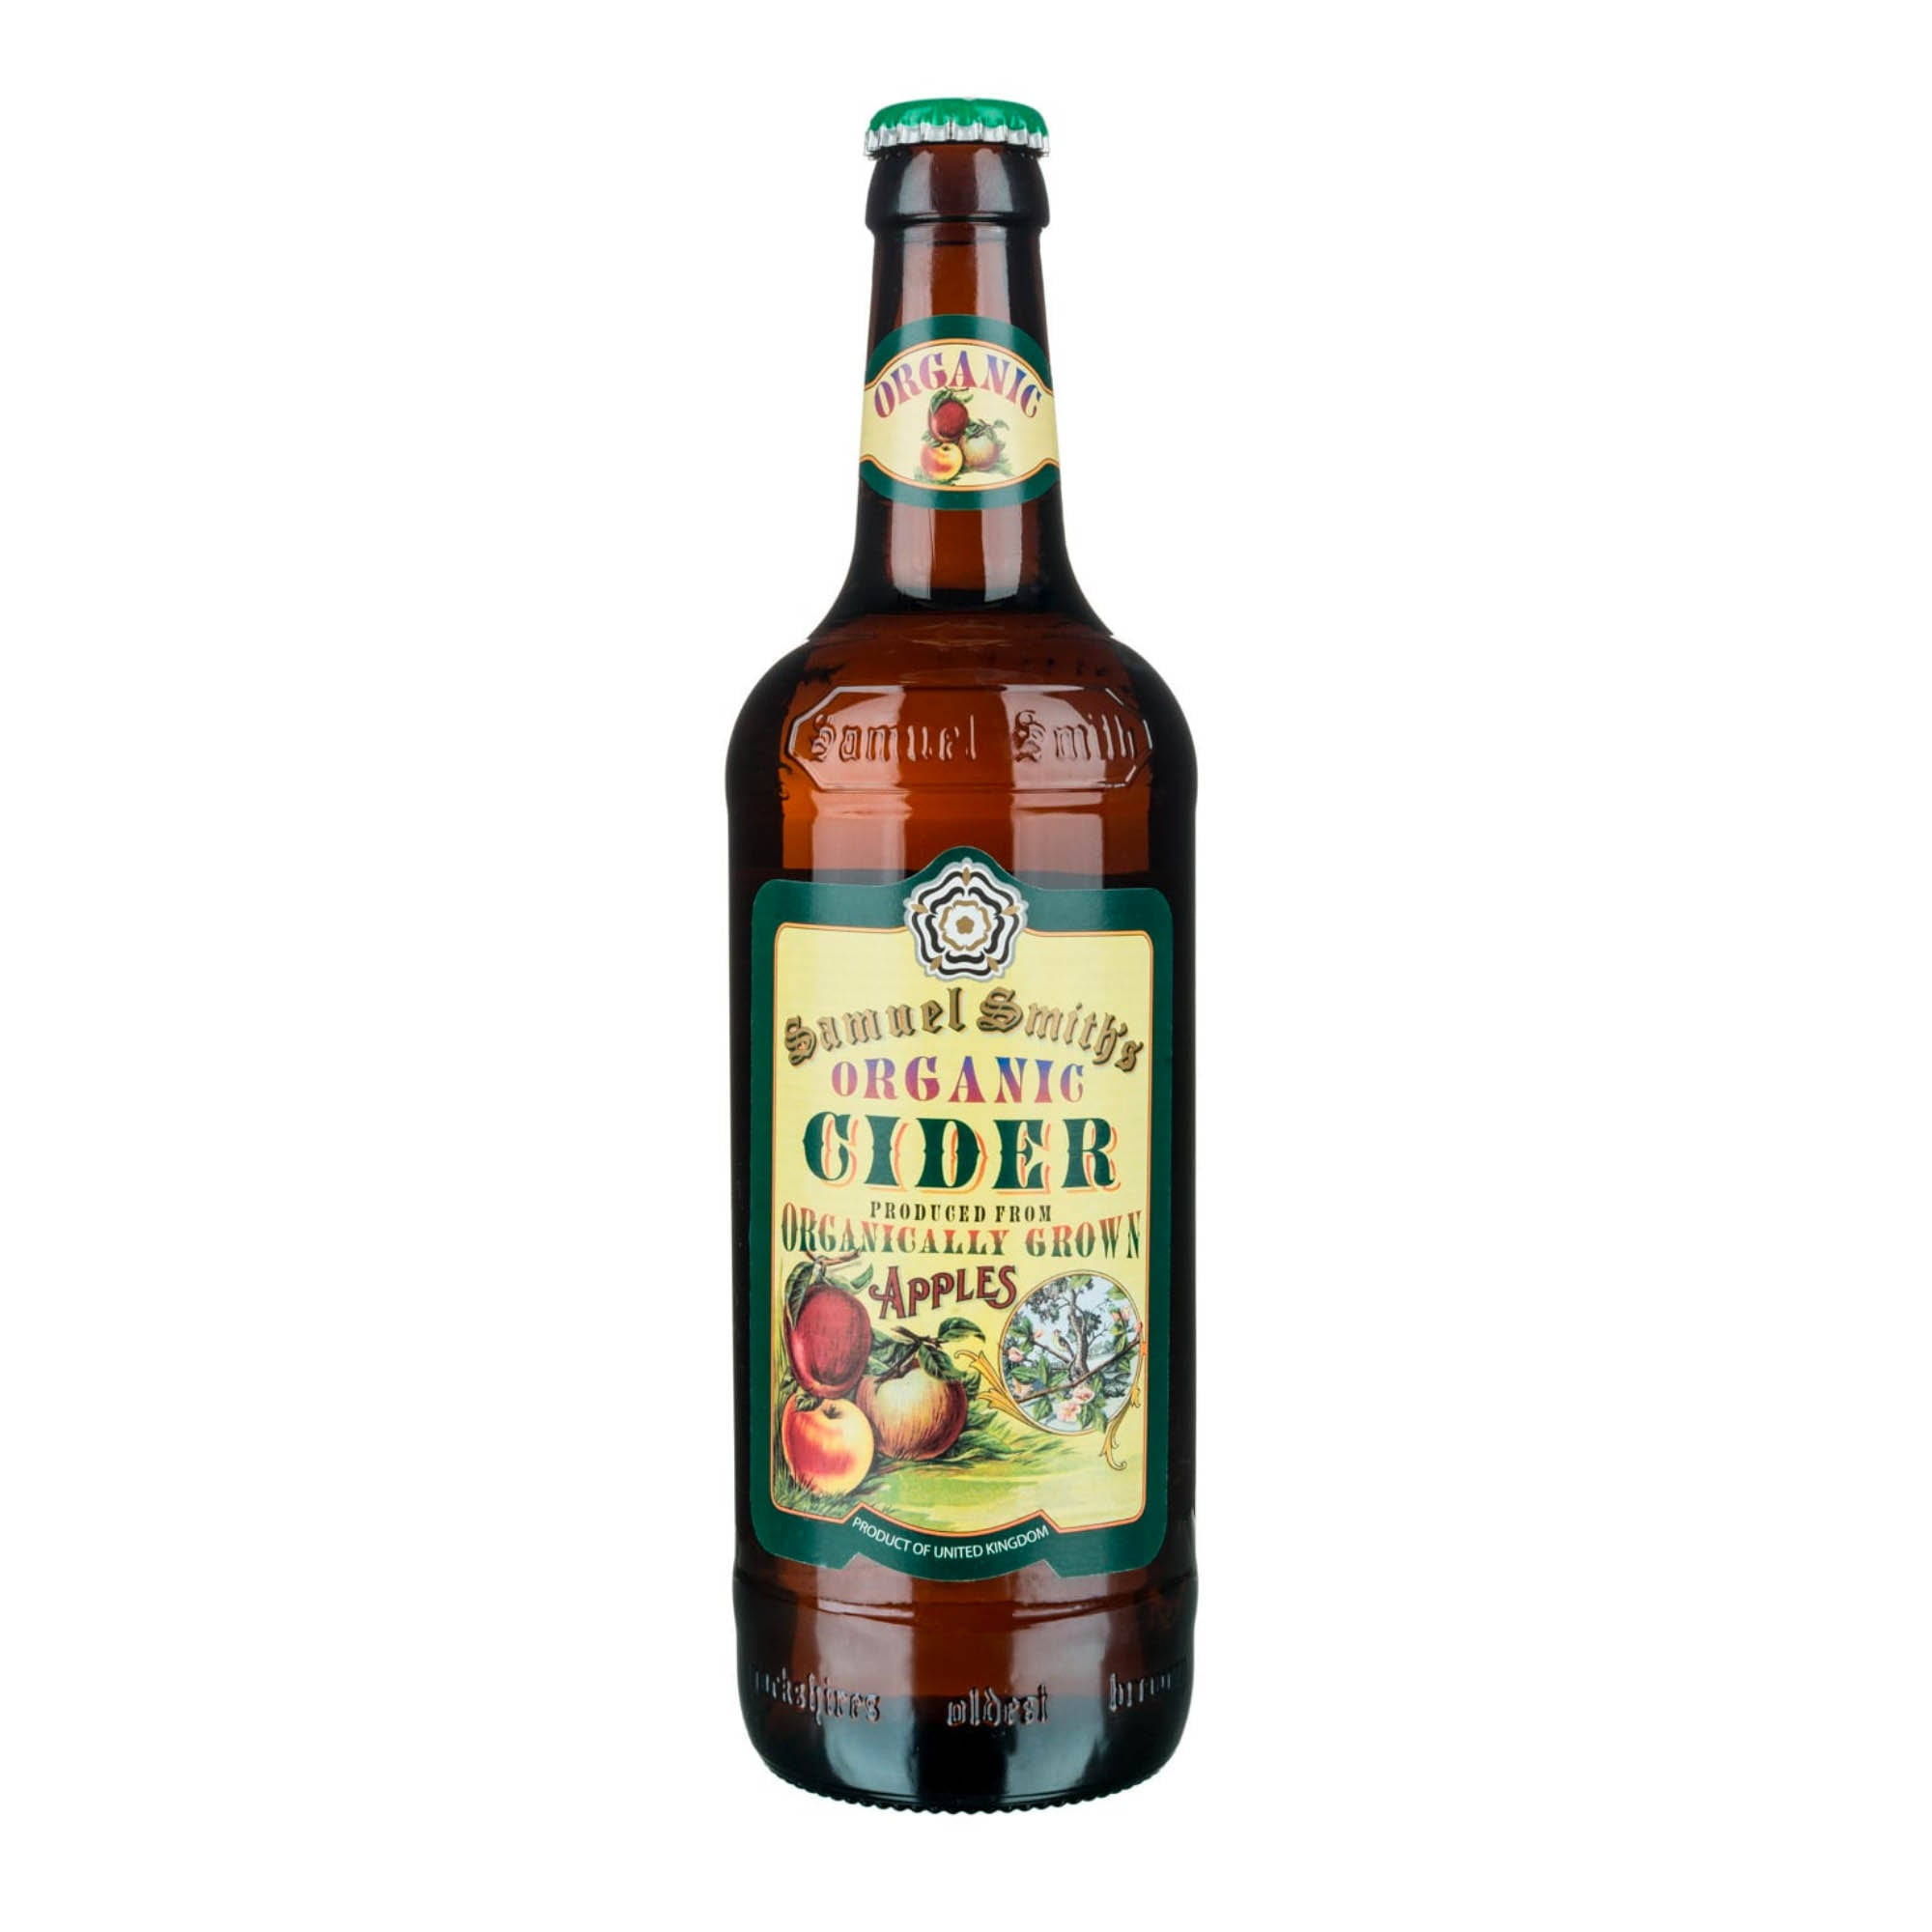 Samuel Smith's Organic Cider - 16oz